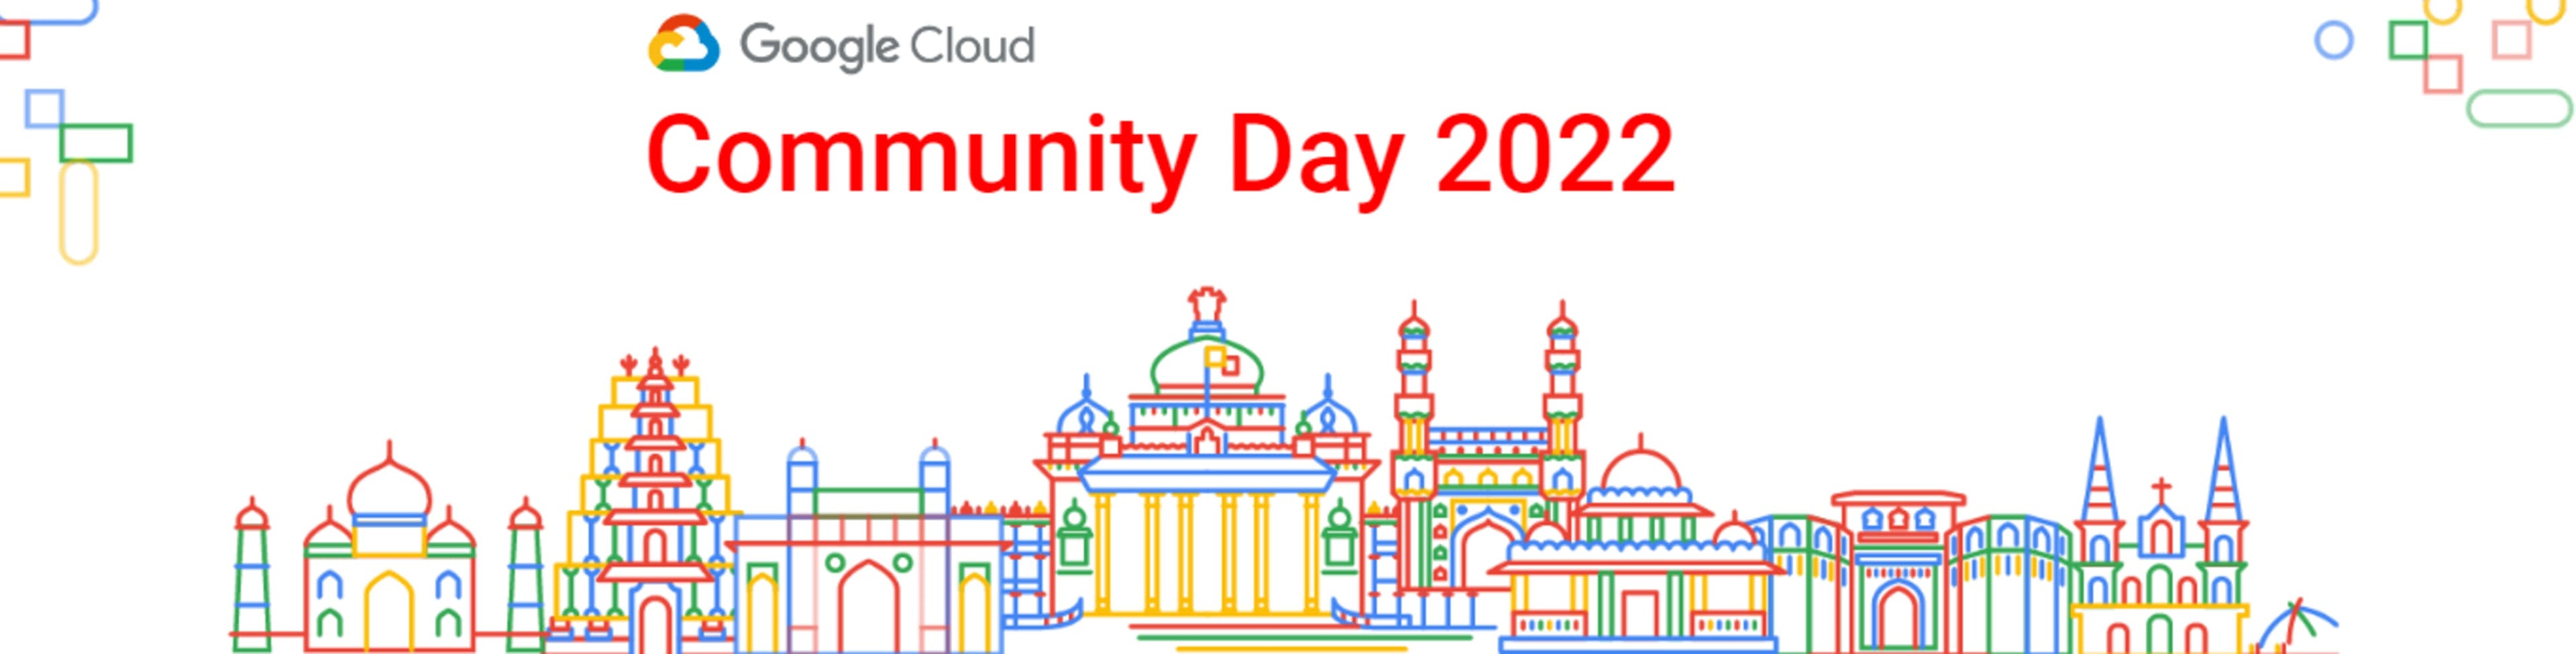 Cloud Community Days 2022 | GDG Cloud Bhopal